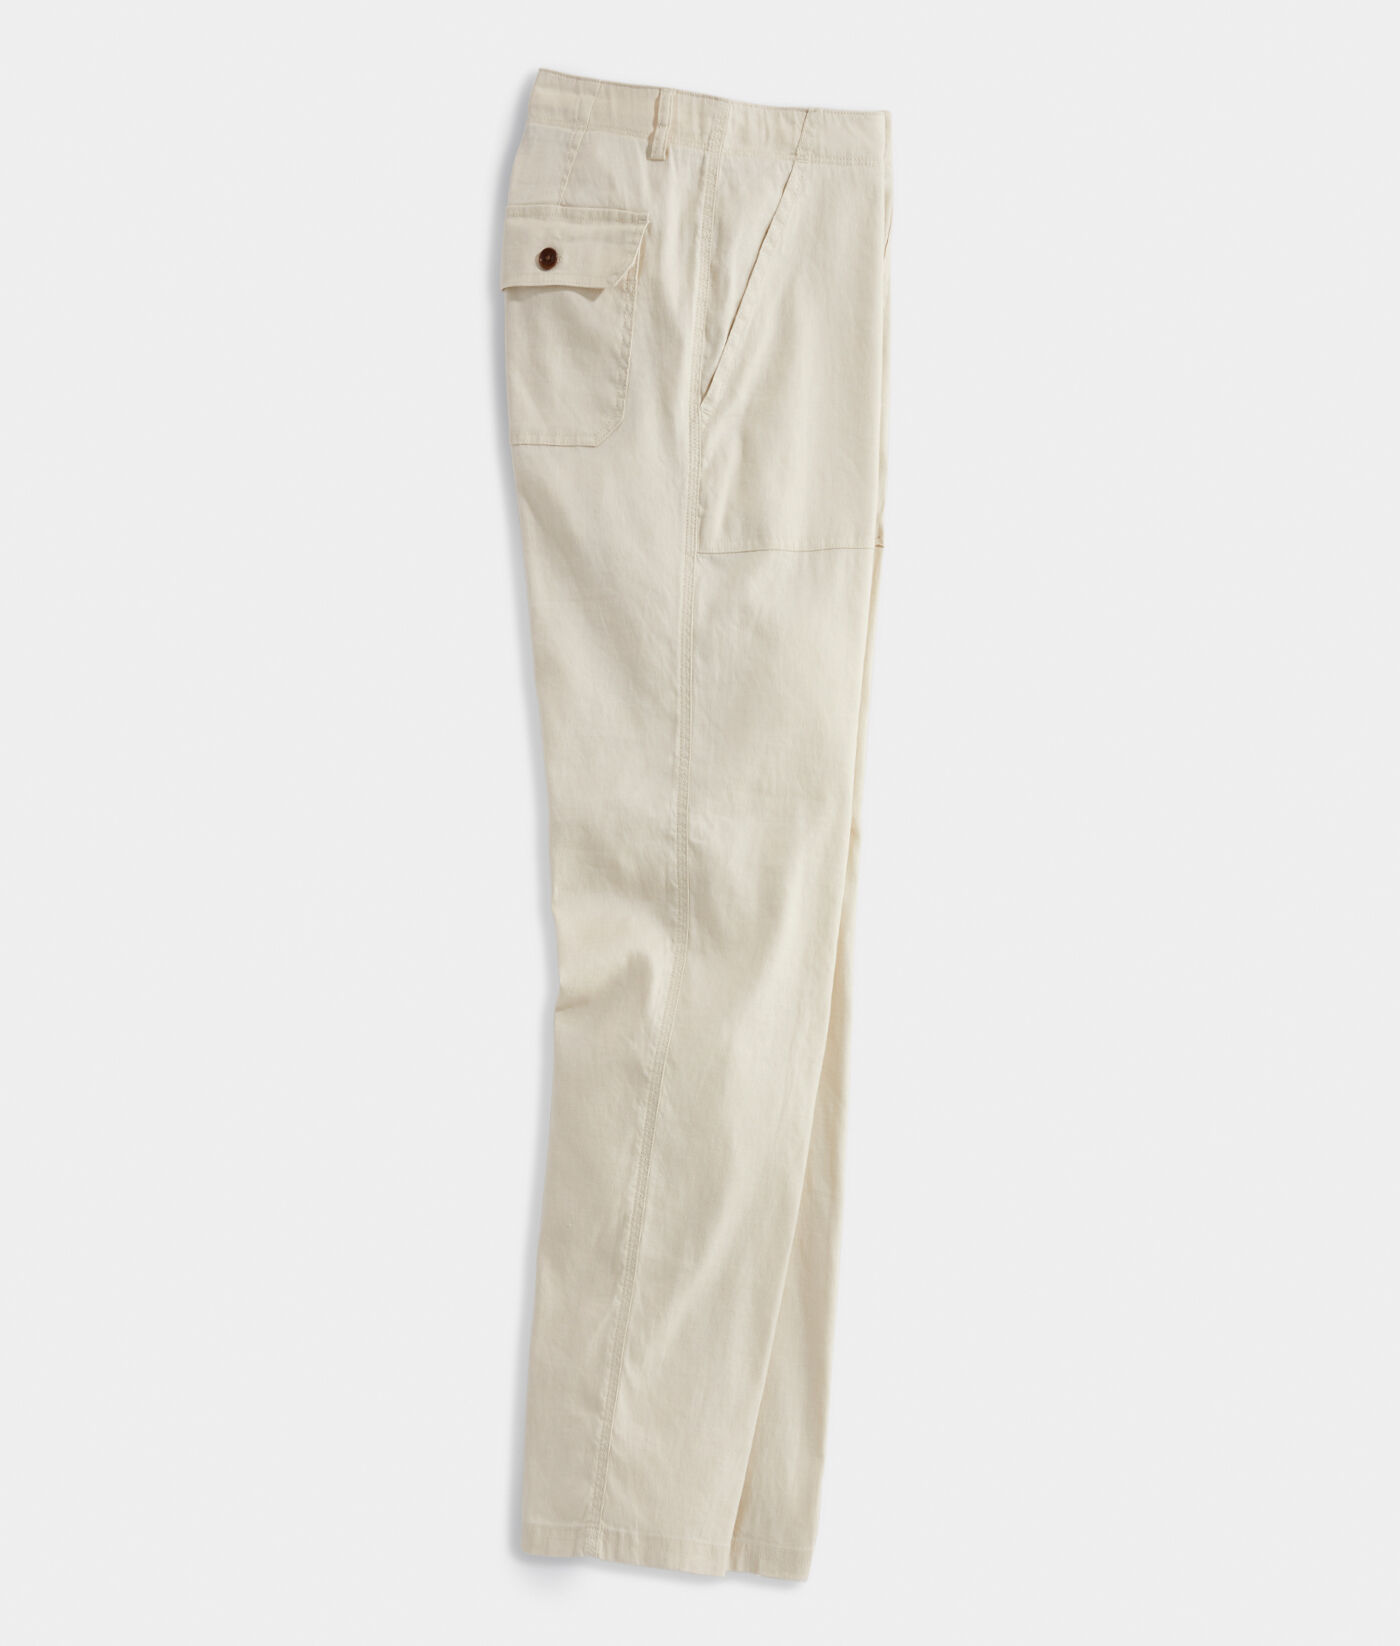 JWD Men's Drawstring Linen Pants Casual Summer Beach Loose Trousers  Beige-US 38 - Walmart.com